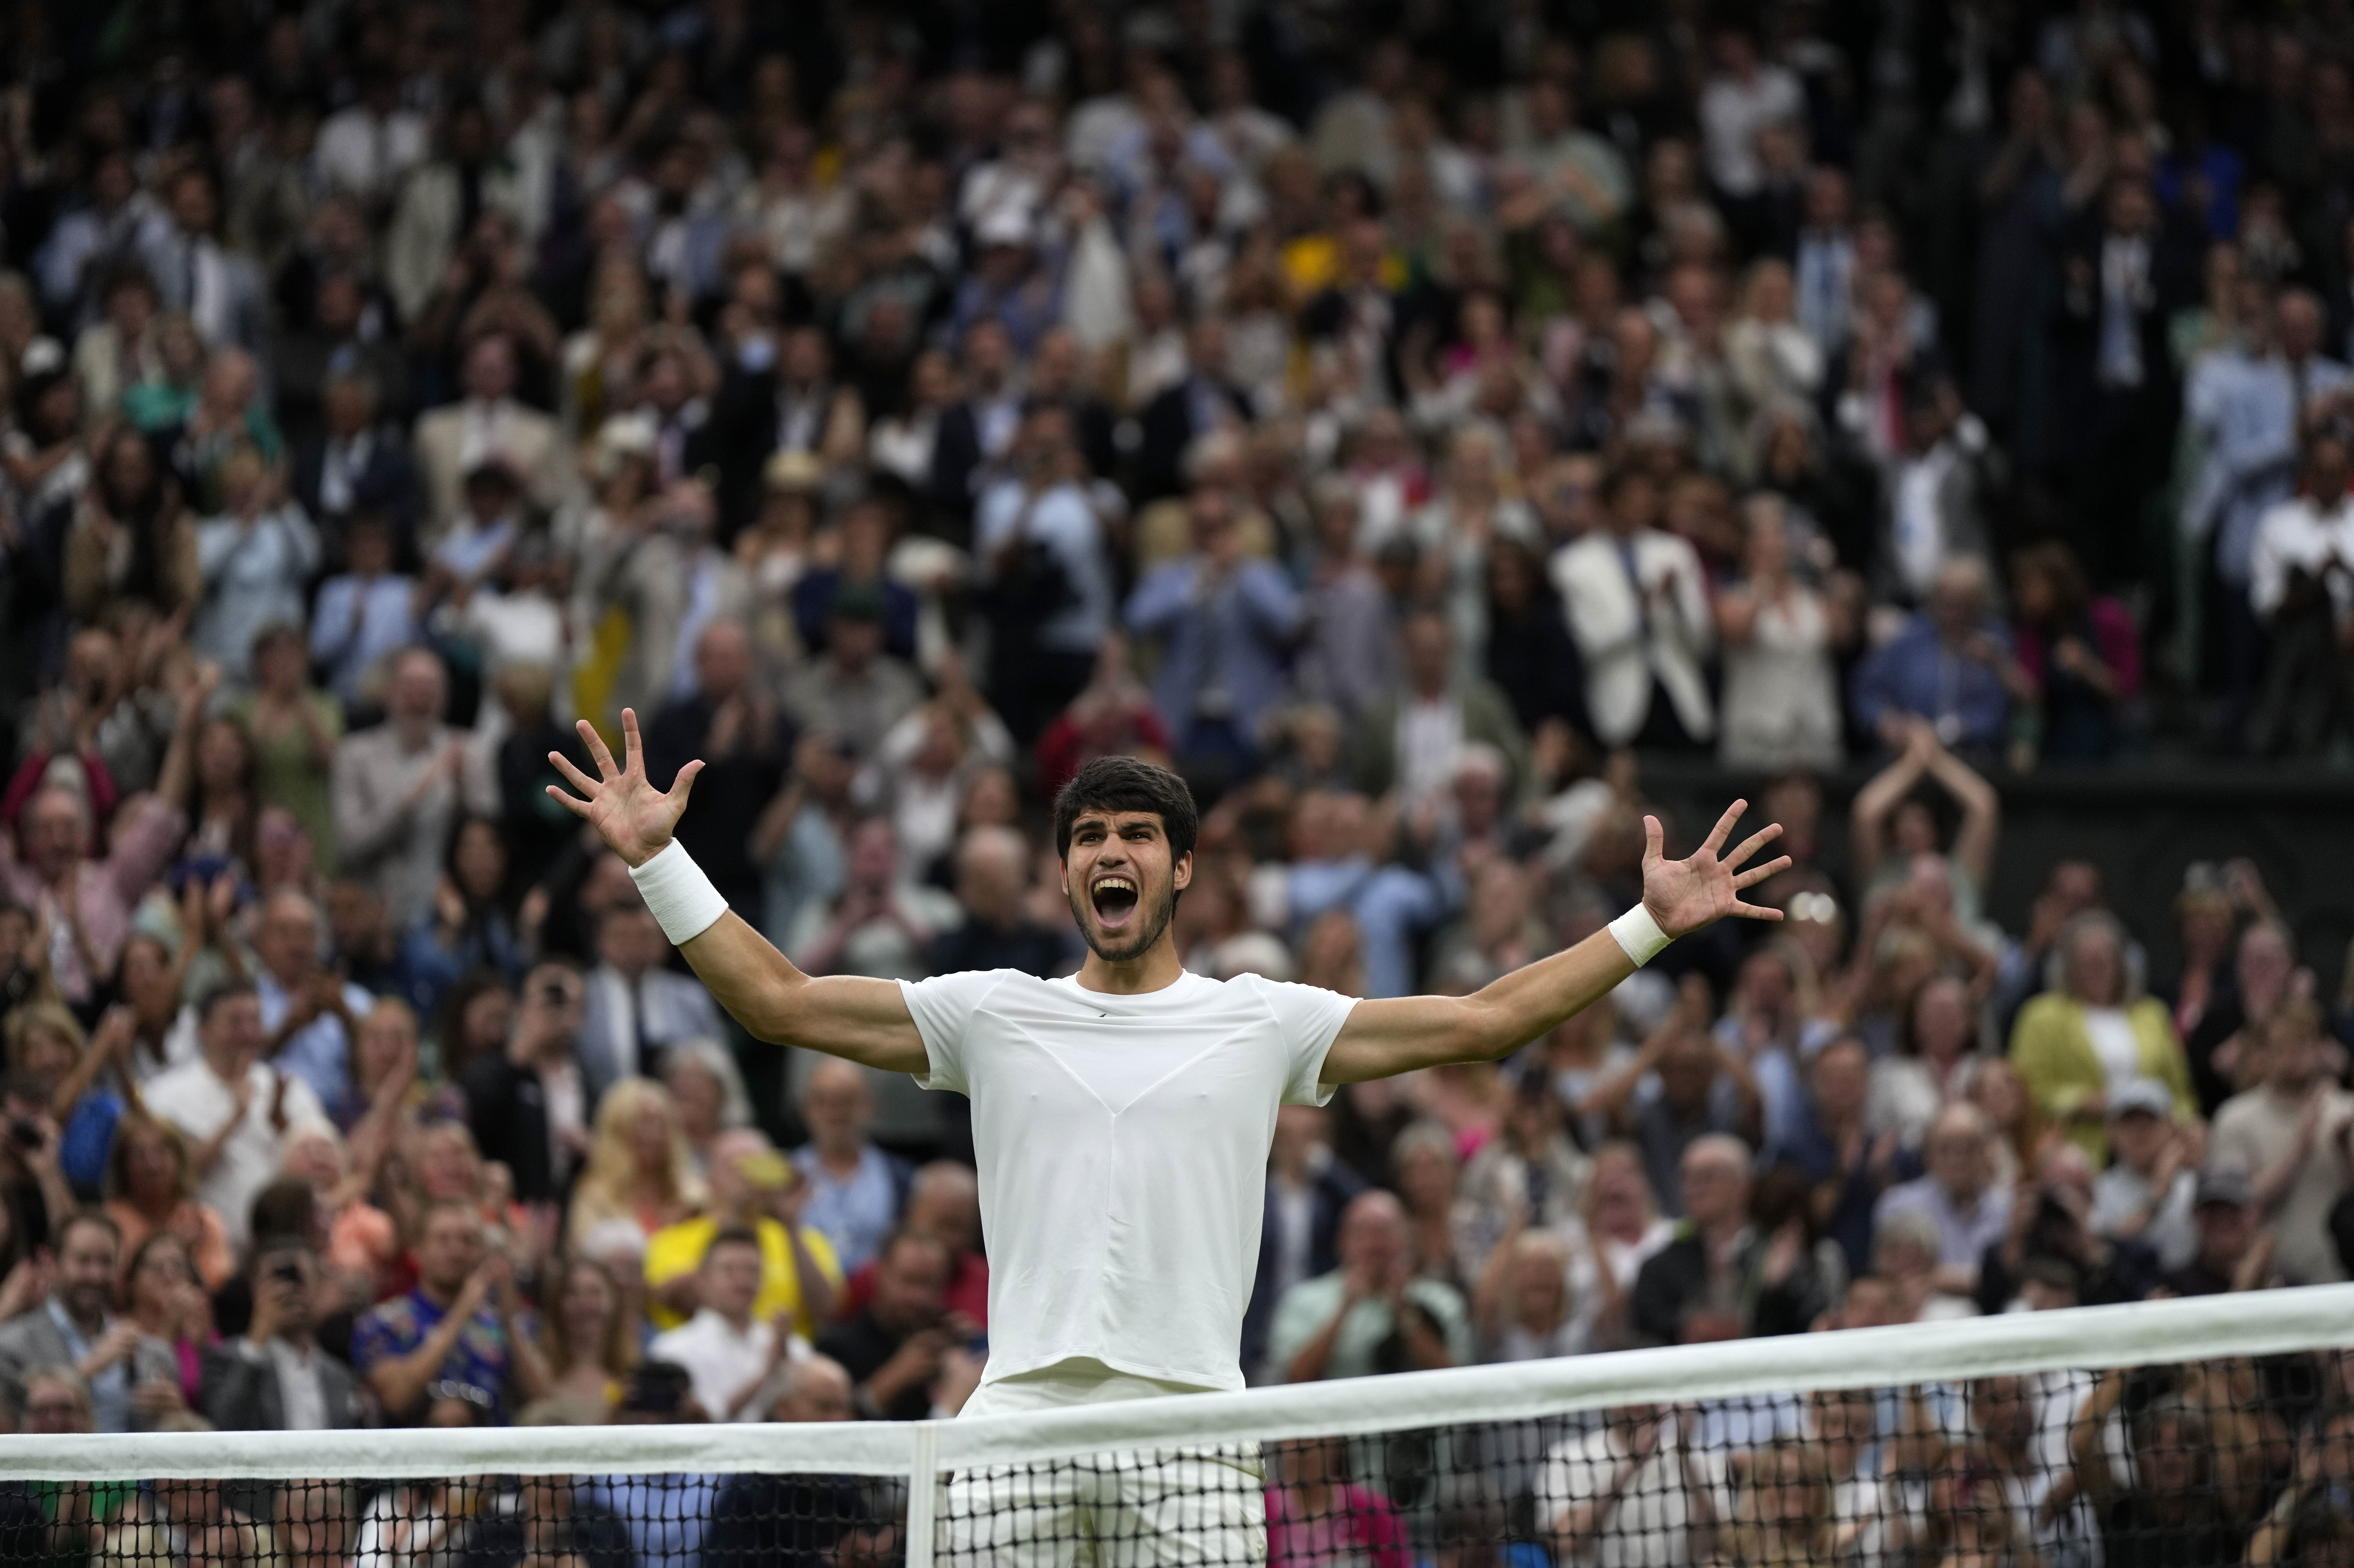 Carlos Alcaraz will face Novak Djokovic in a Wimbledon mens final for the ages